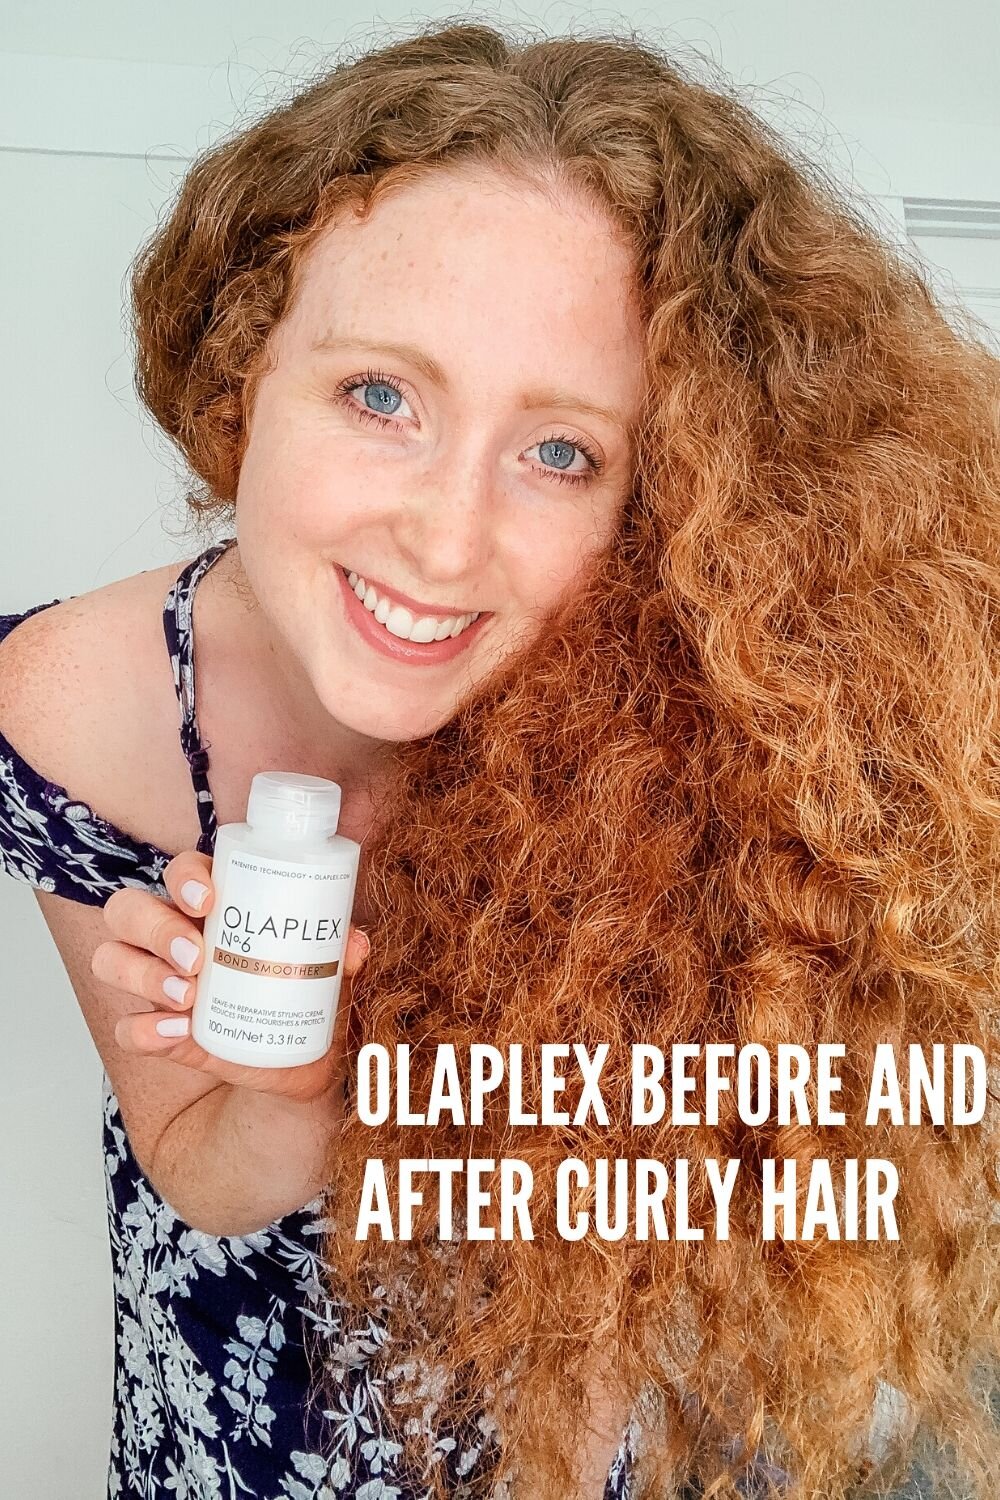 Olaplex Before and After Hair Review - Olaplex No. 3 Hair Perfector, Olaplex No. 6 Bond Smoother and Olaplex No. 7 Bonding Oil